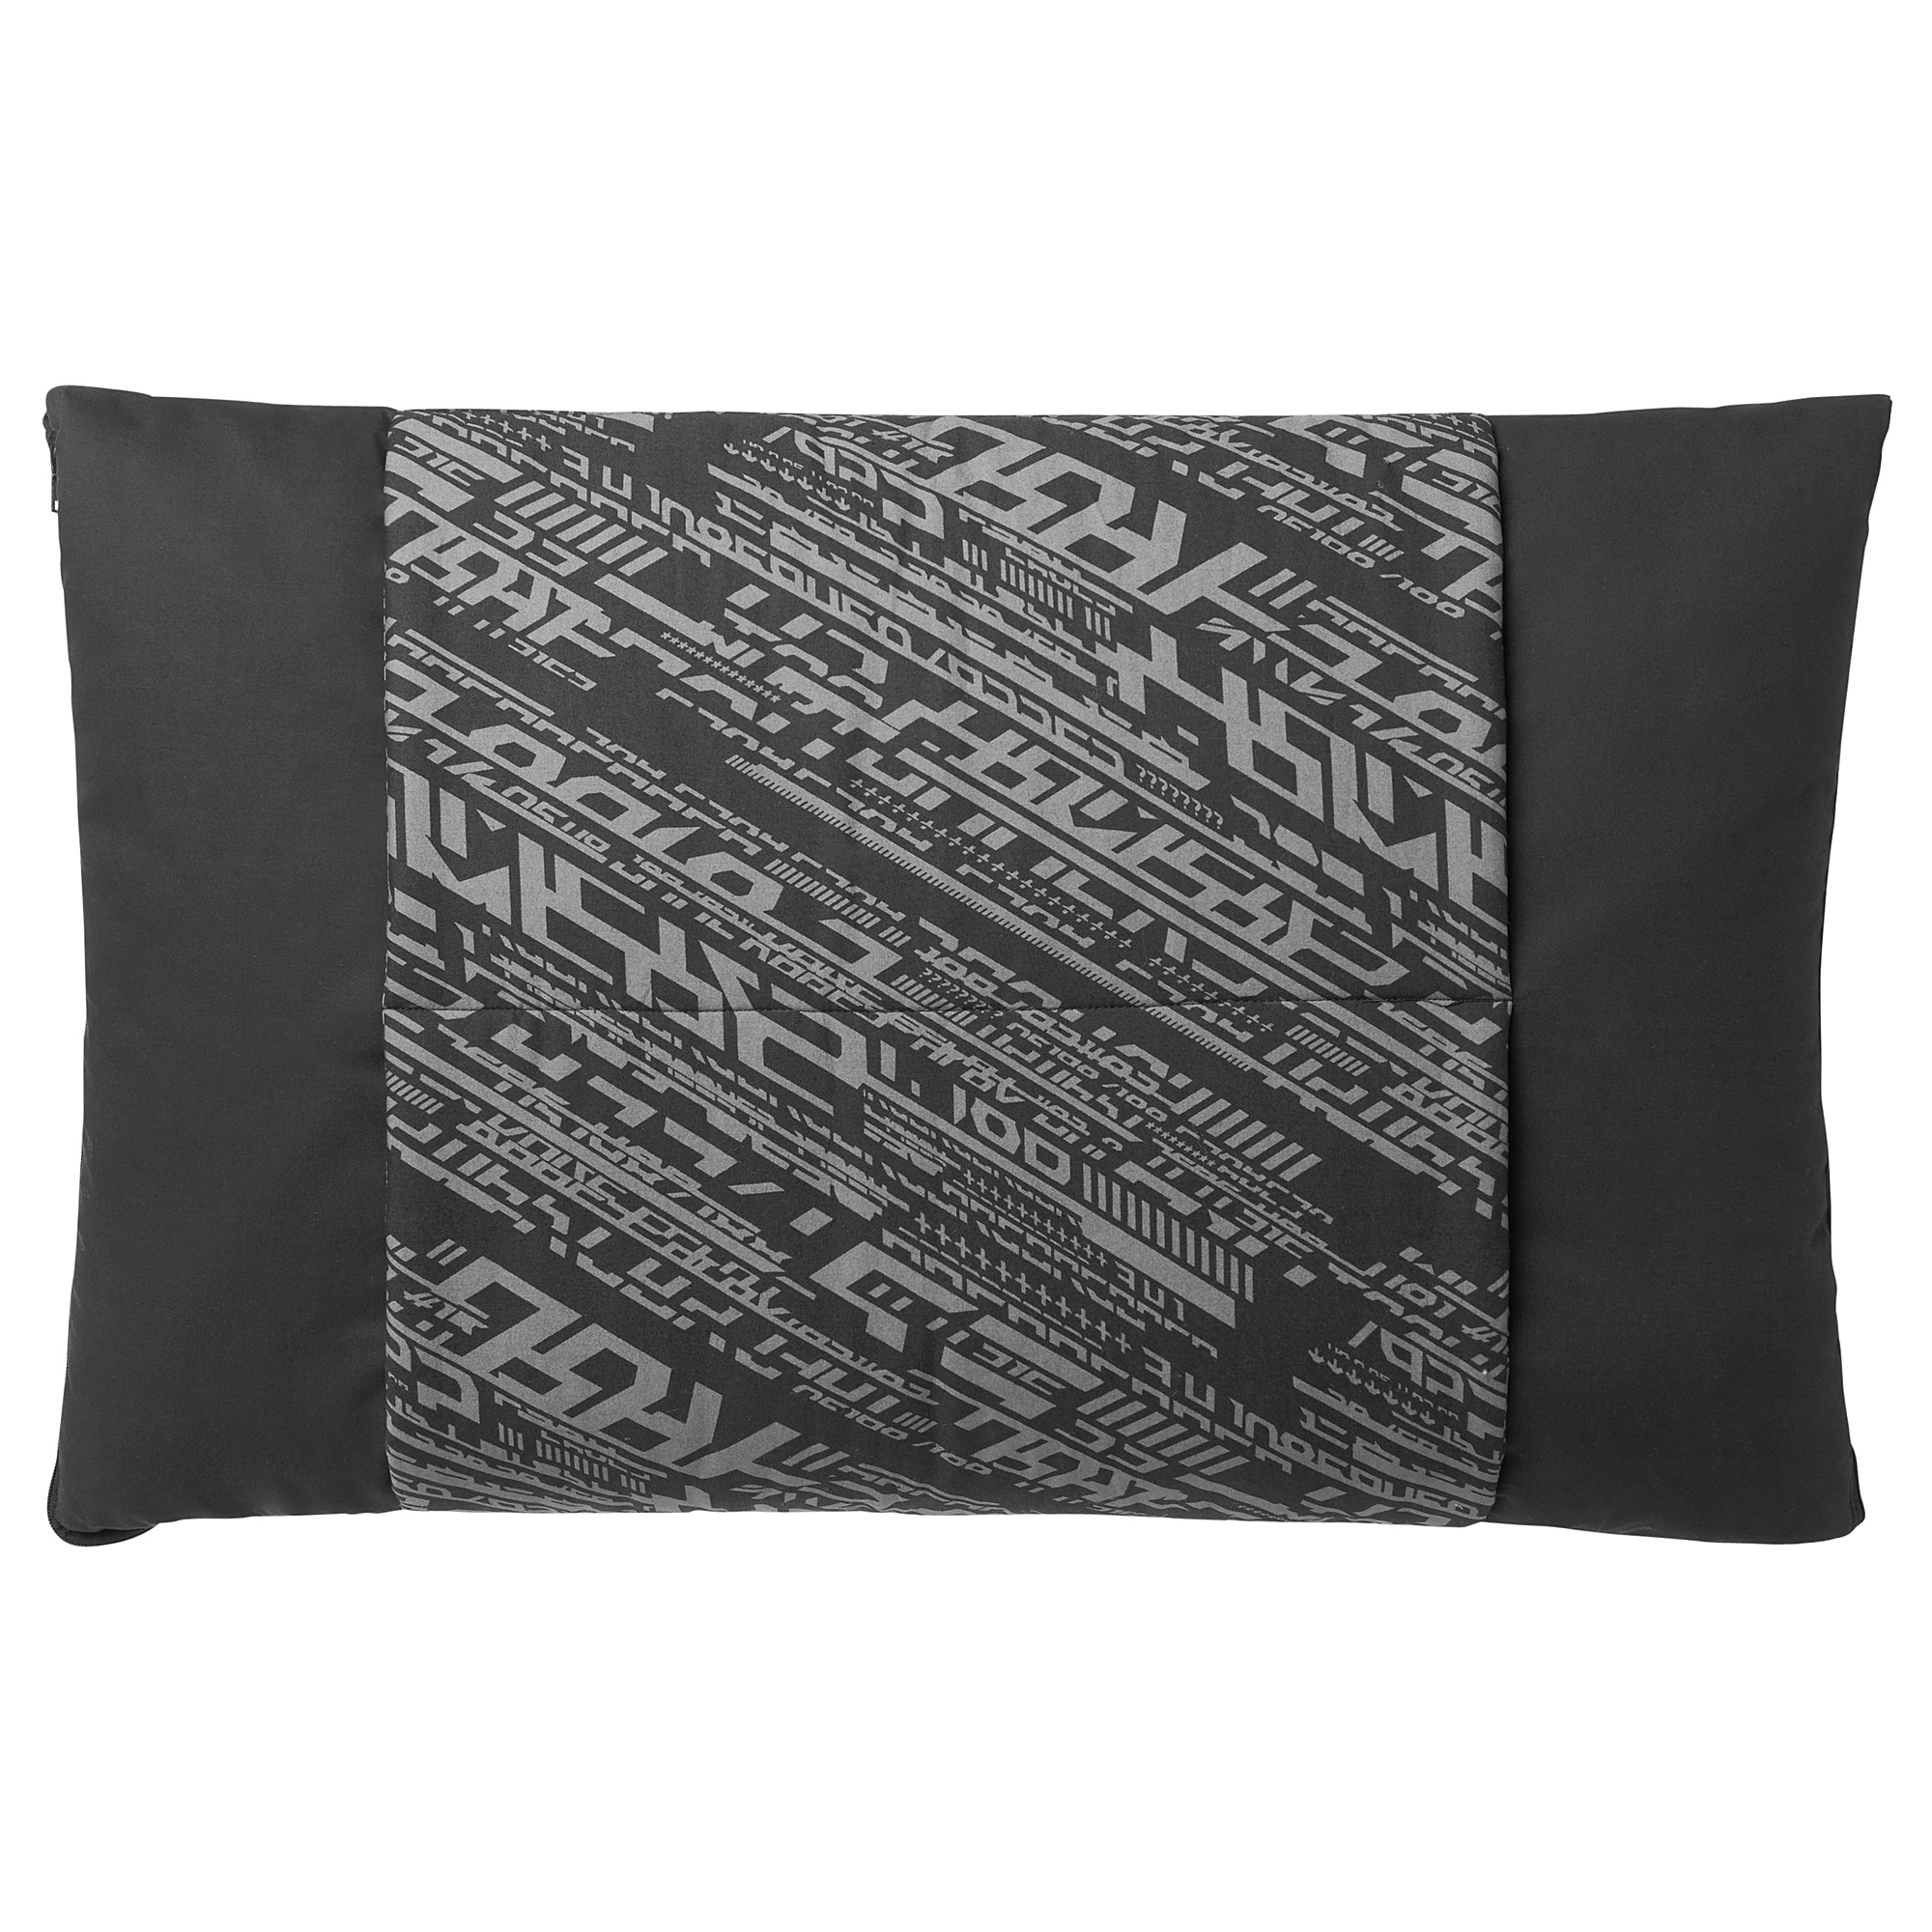 LÅNESPELARE multi-functional cushion/blanket